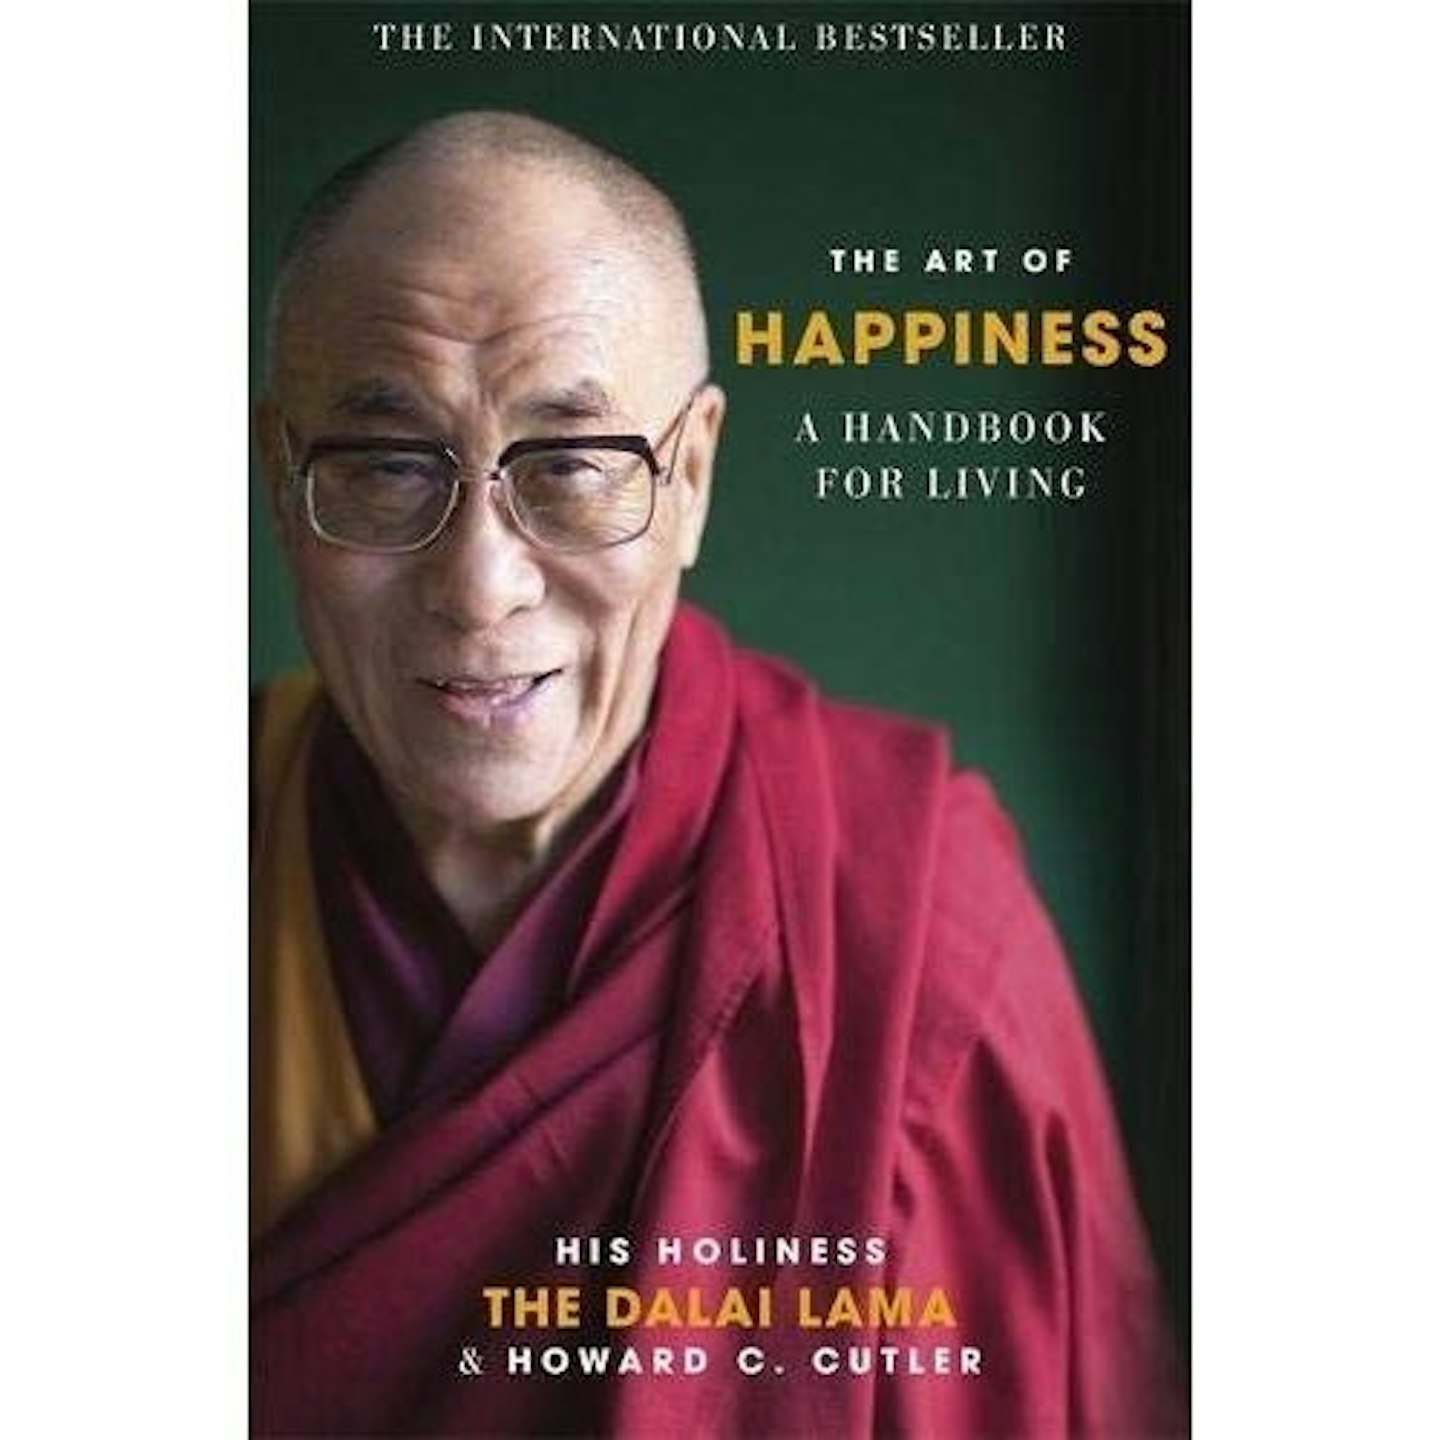 The Art of Happiness by Dalai Lama XIV and Howard C. Cutler